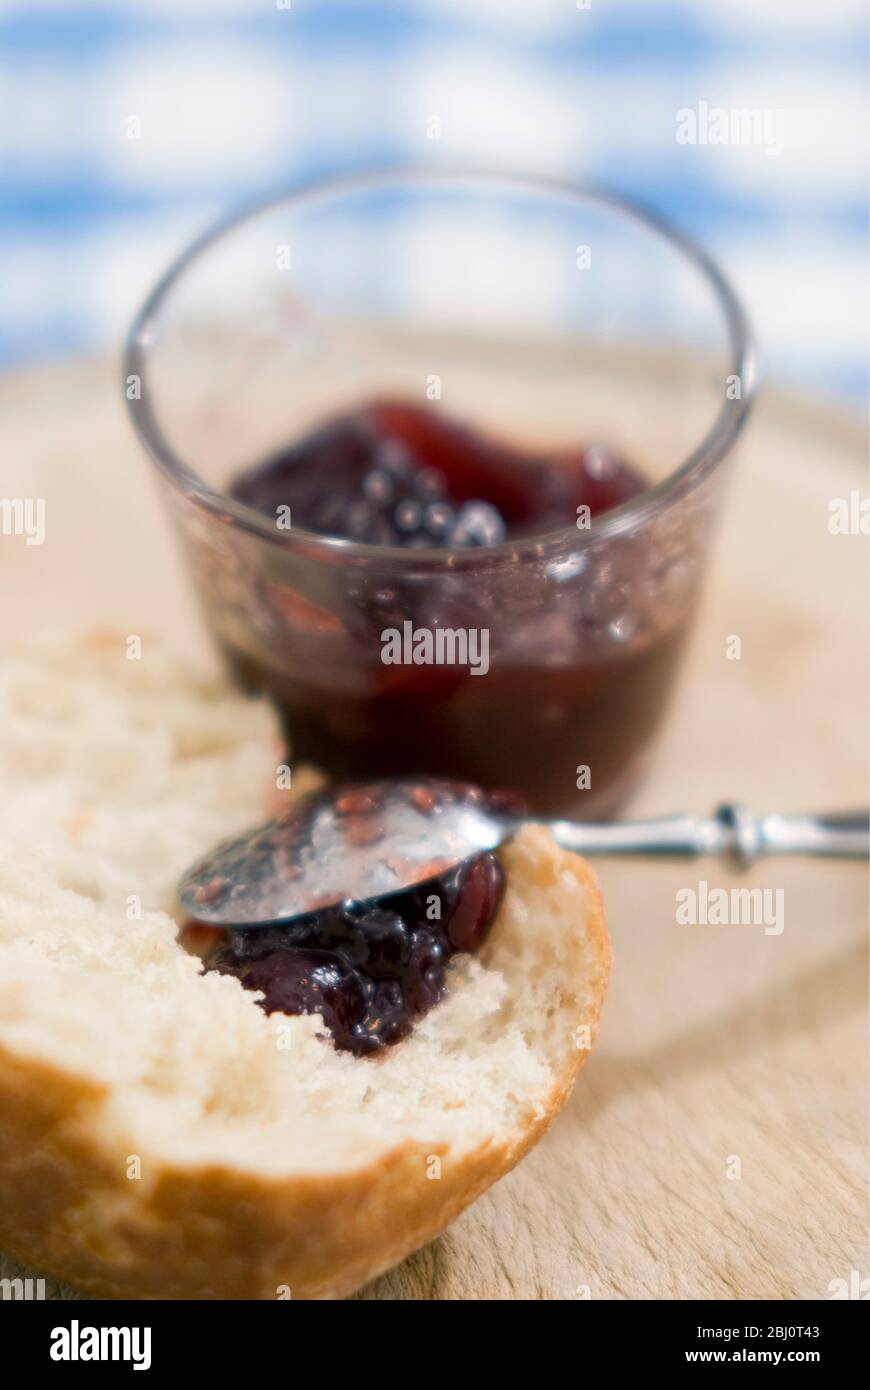 Broken crusty bread with dollop of seedless raspberry jam - Stock Photo